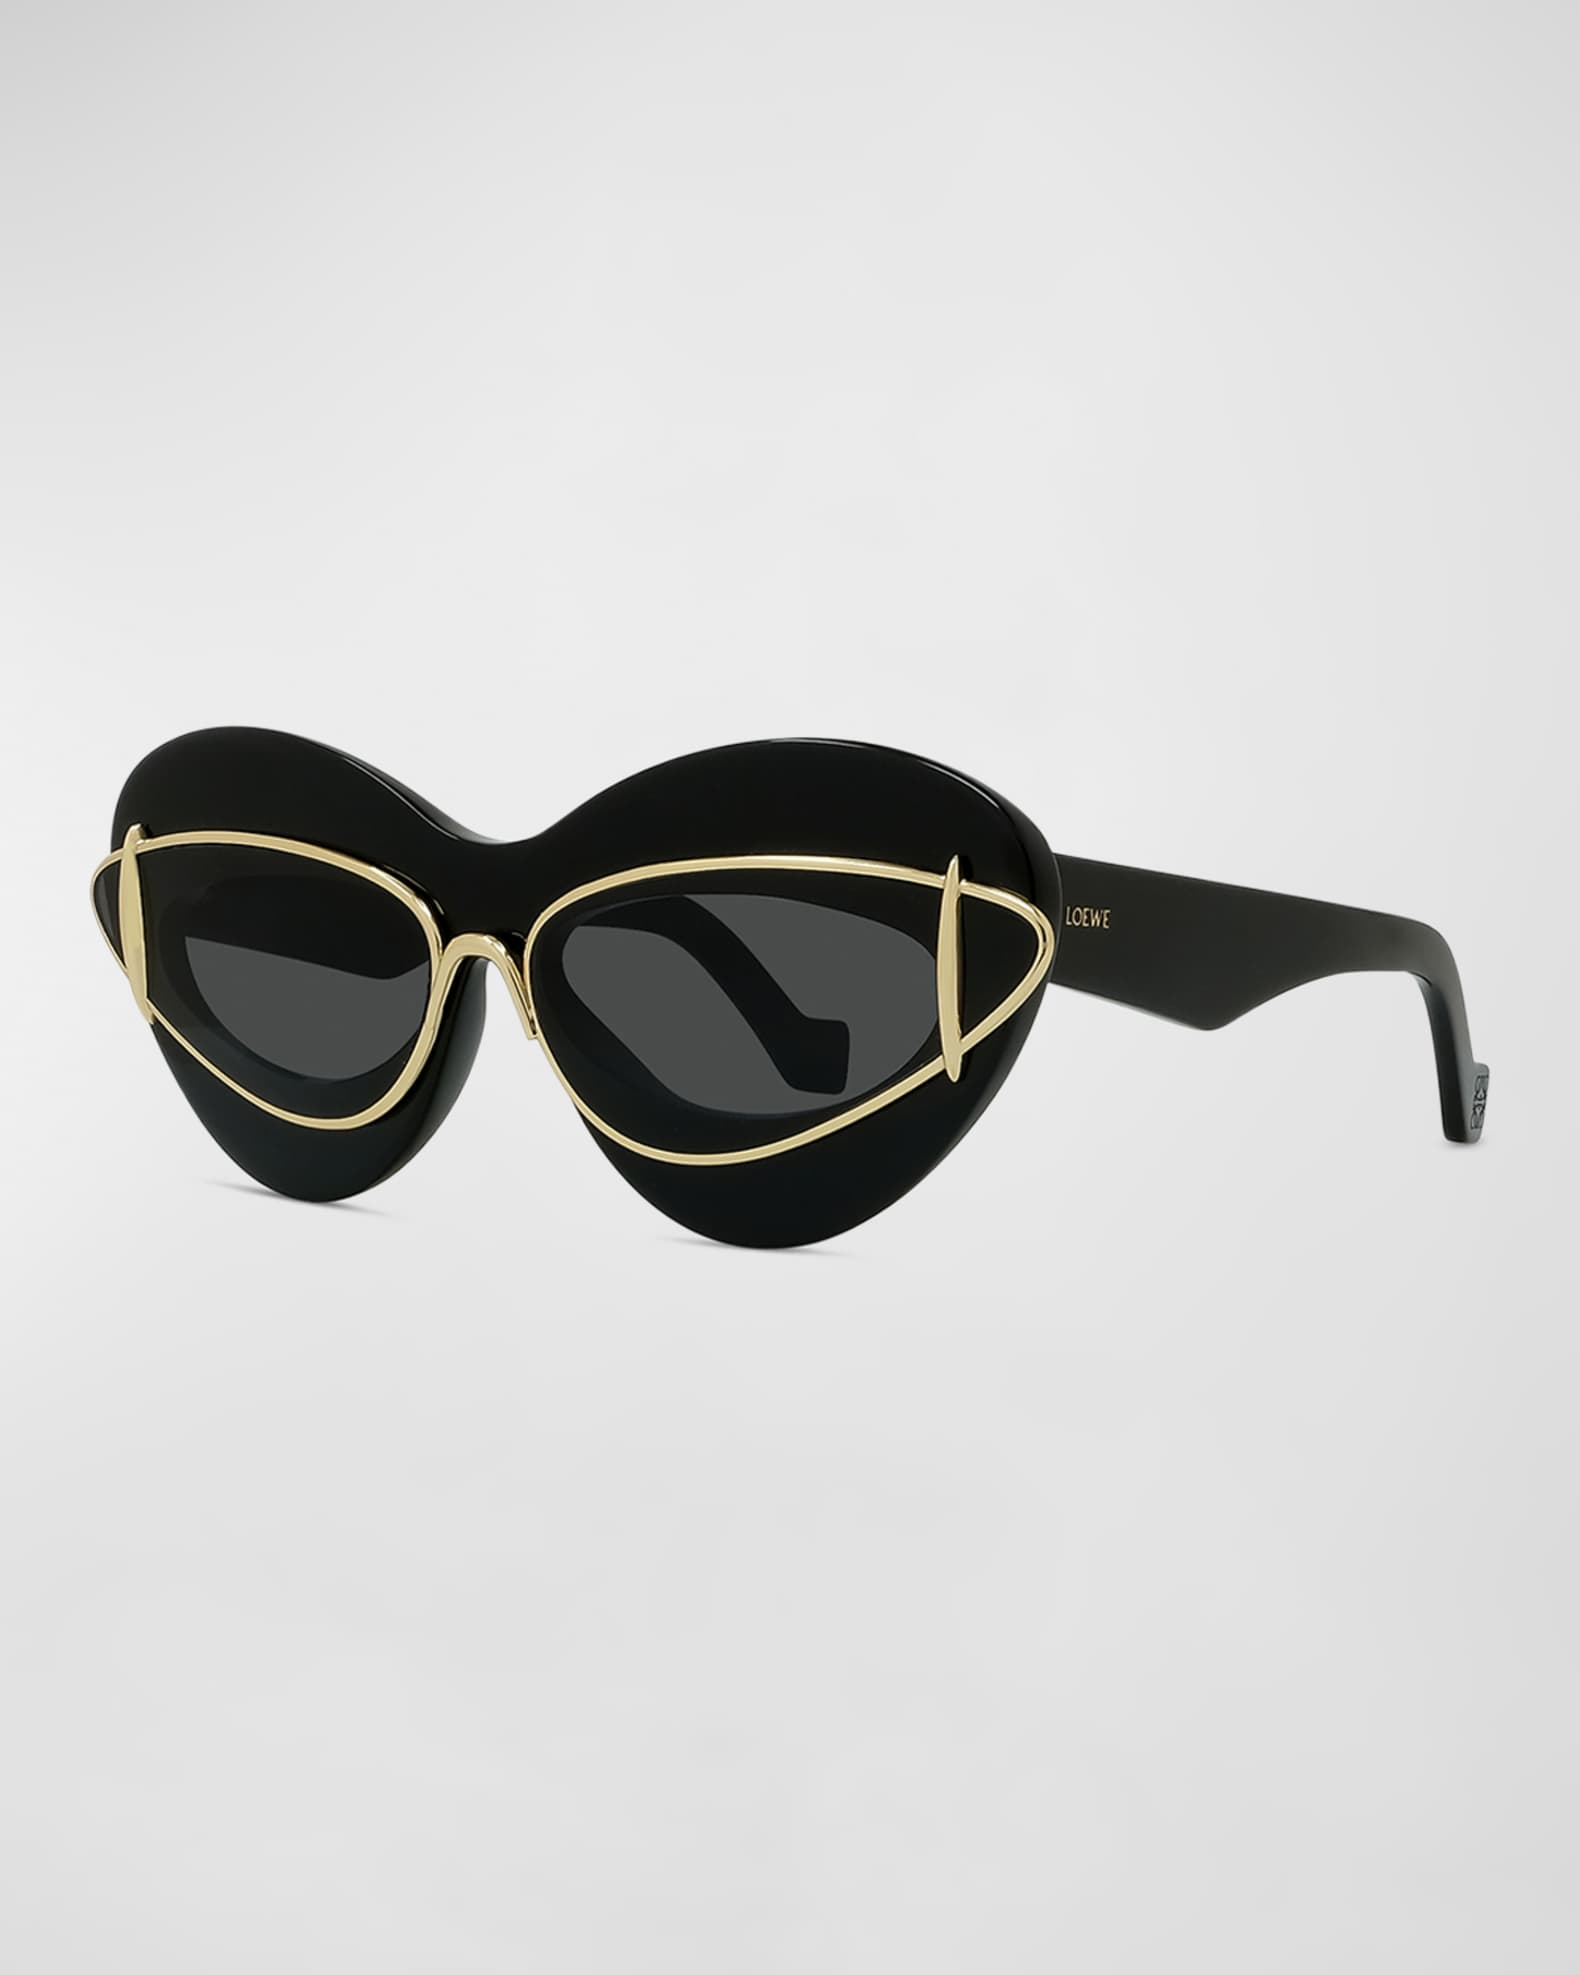 Luxury Retro Cat Eye Sunglasses Crystal Small Frame Modern Fashion